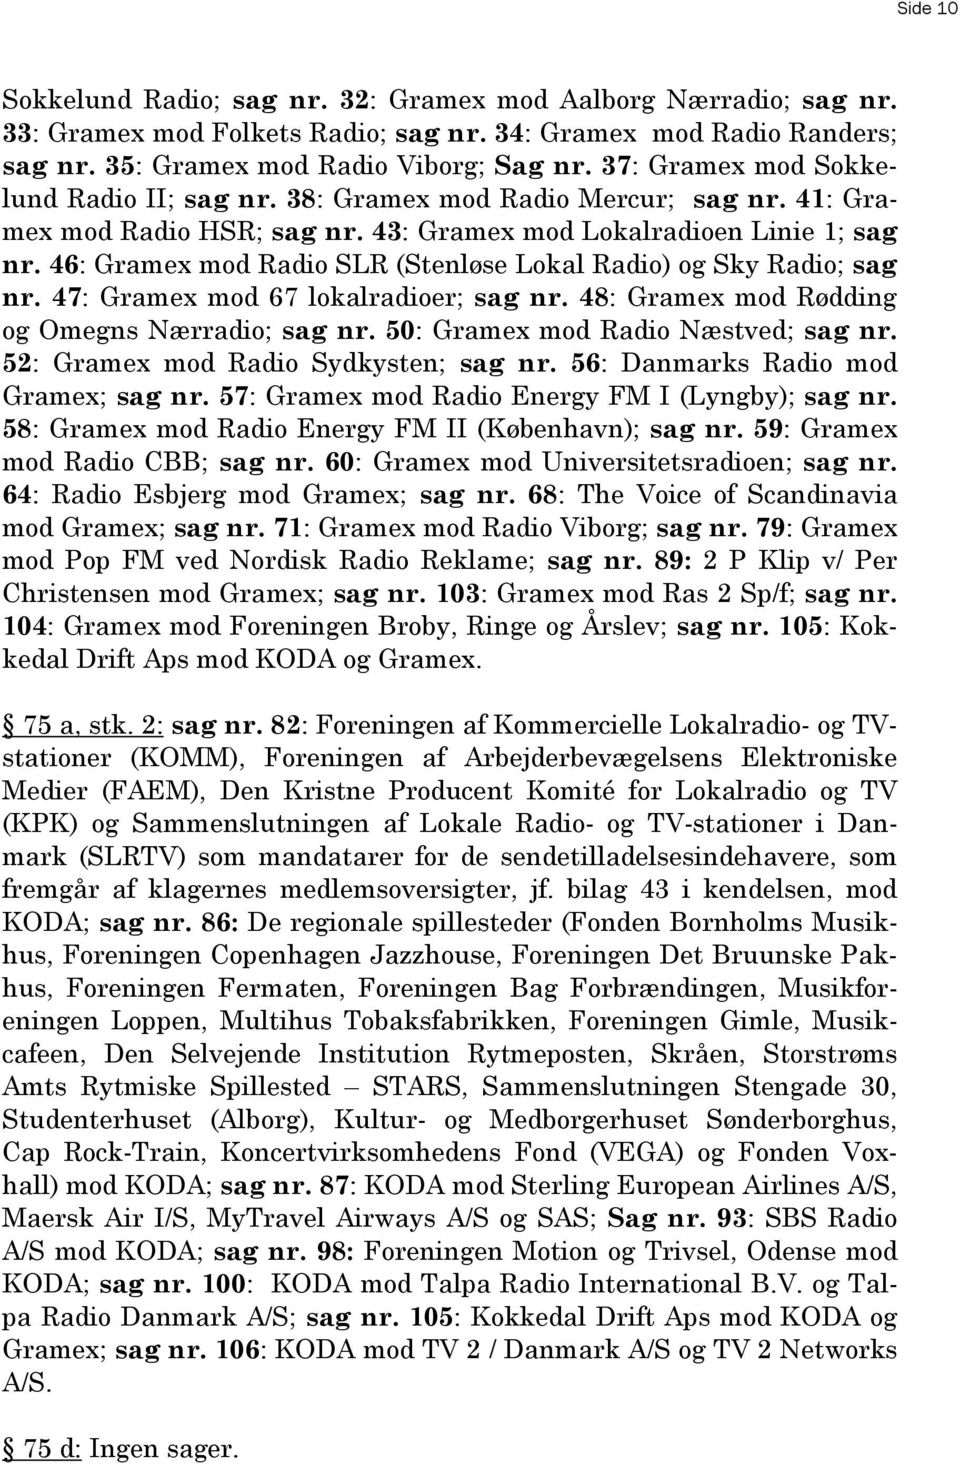 46: Gramex mod Radio SLR (Stenløse Lokal Radio) og Sky Radio; sag nr. 47: Gramex mod 67 lokalradioer; sag nr. 48: Gramex mod Rødding og Omegns Nærradio; sag nr. 50: Gramex mod Radio Næstved; sag nr.